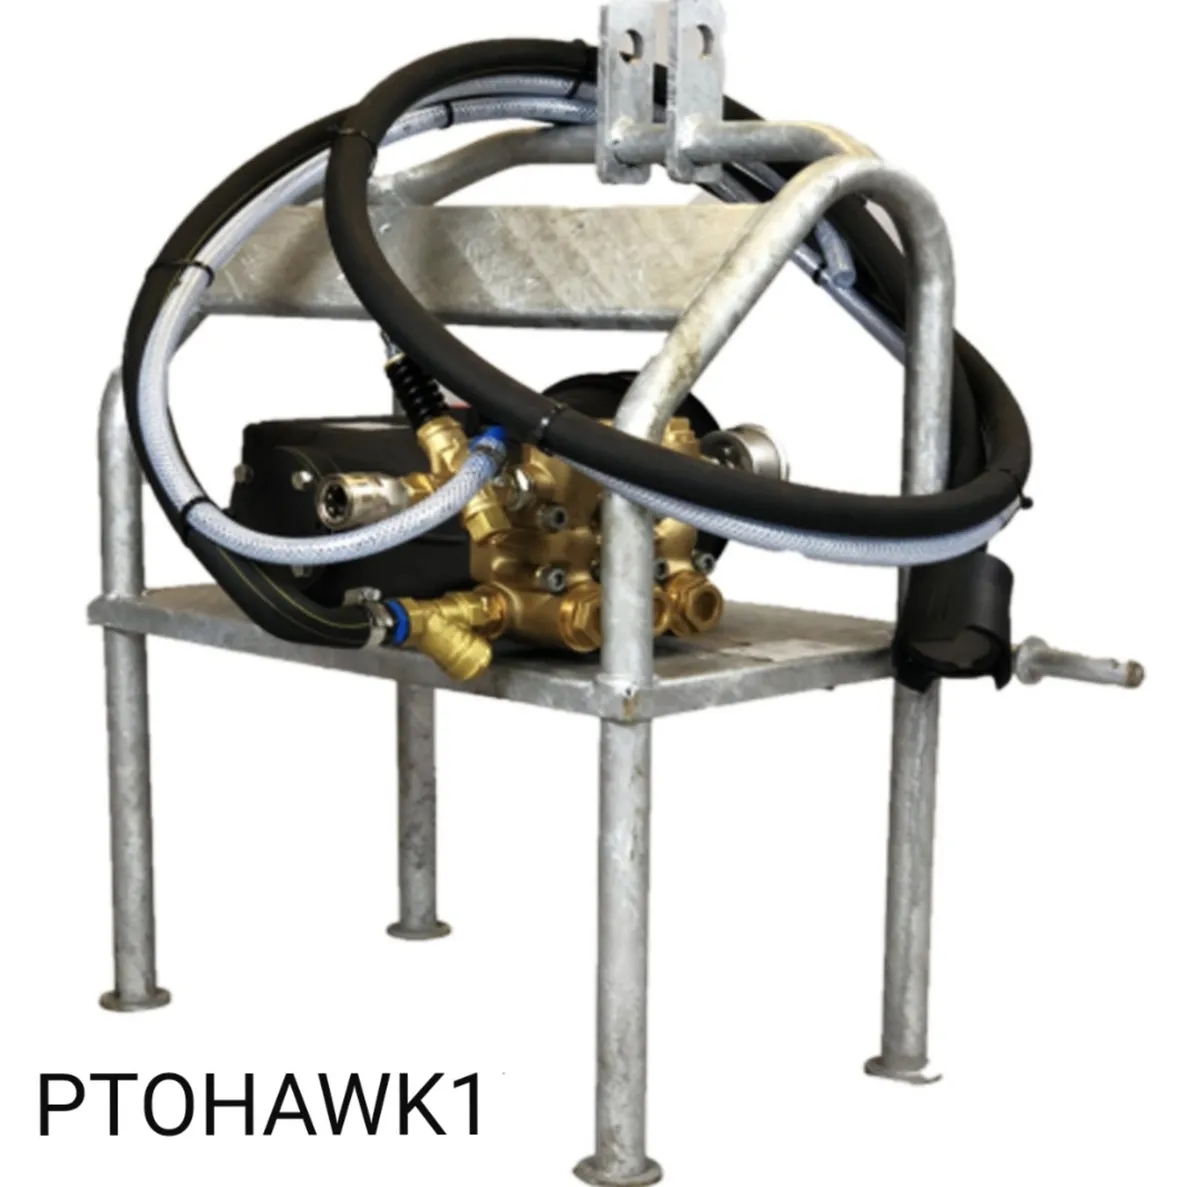 PTO Power Pressure Washer Hawk direct drive - Image 1